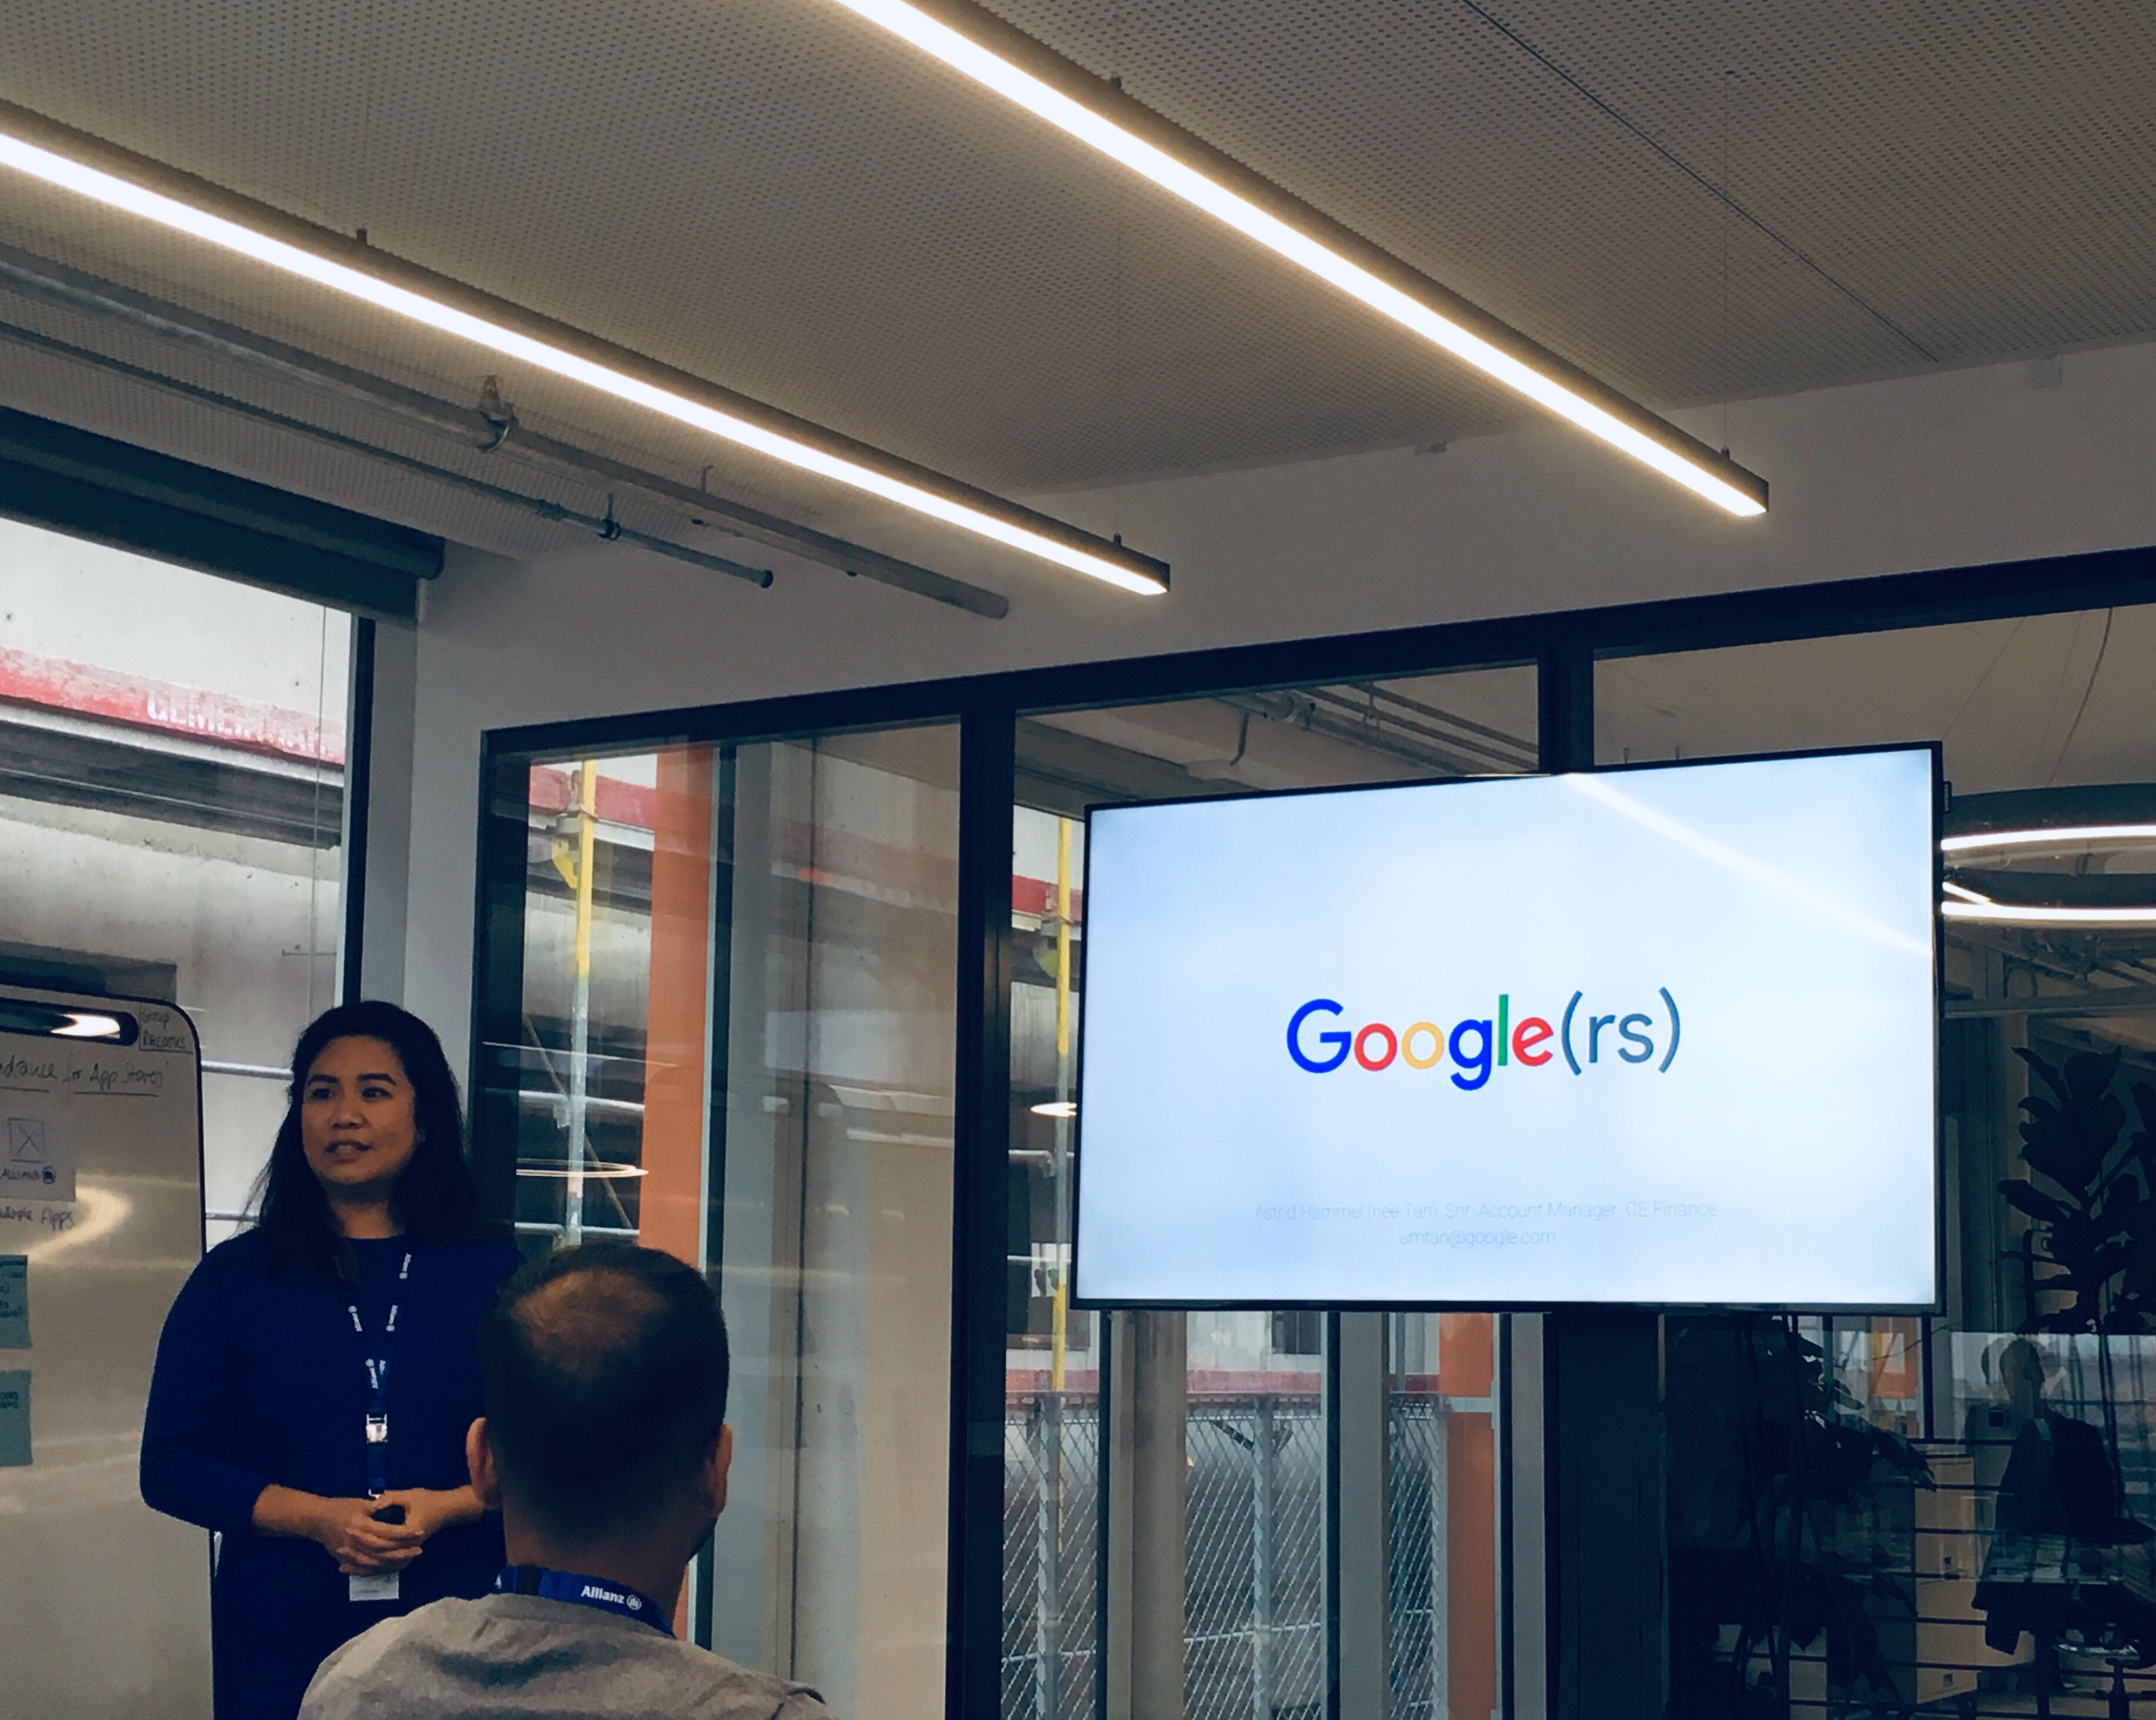 Astrid Hammel from Google presenting